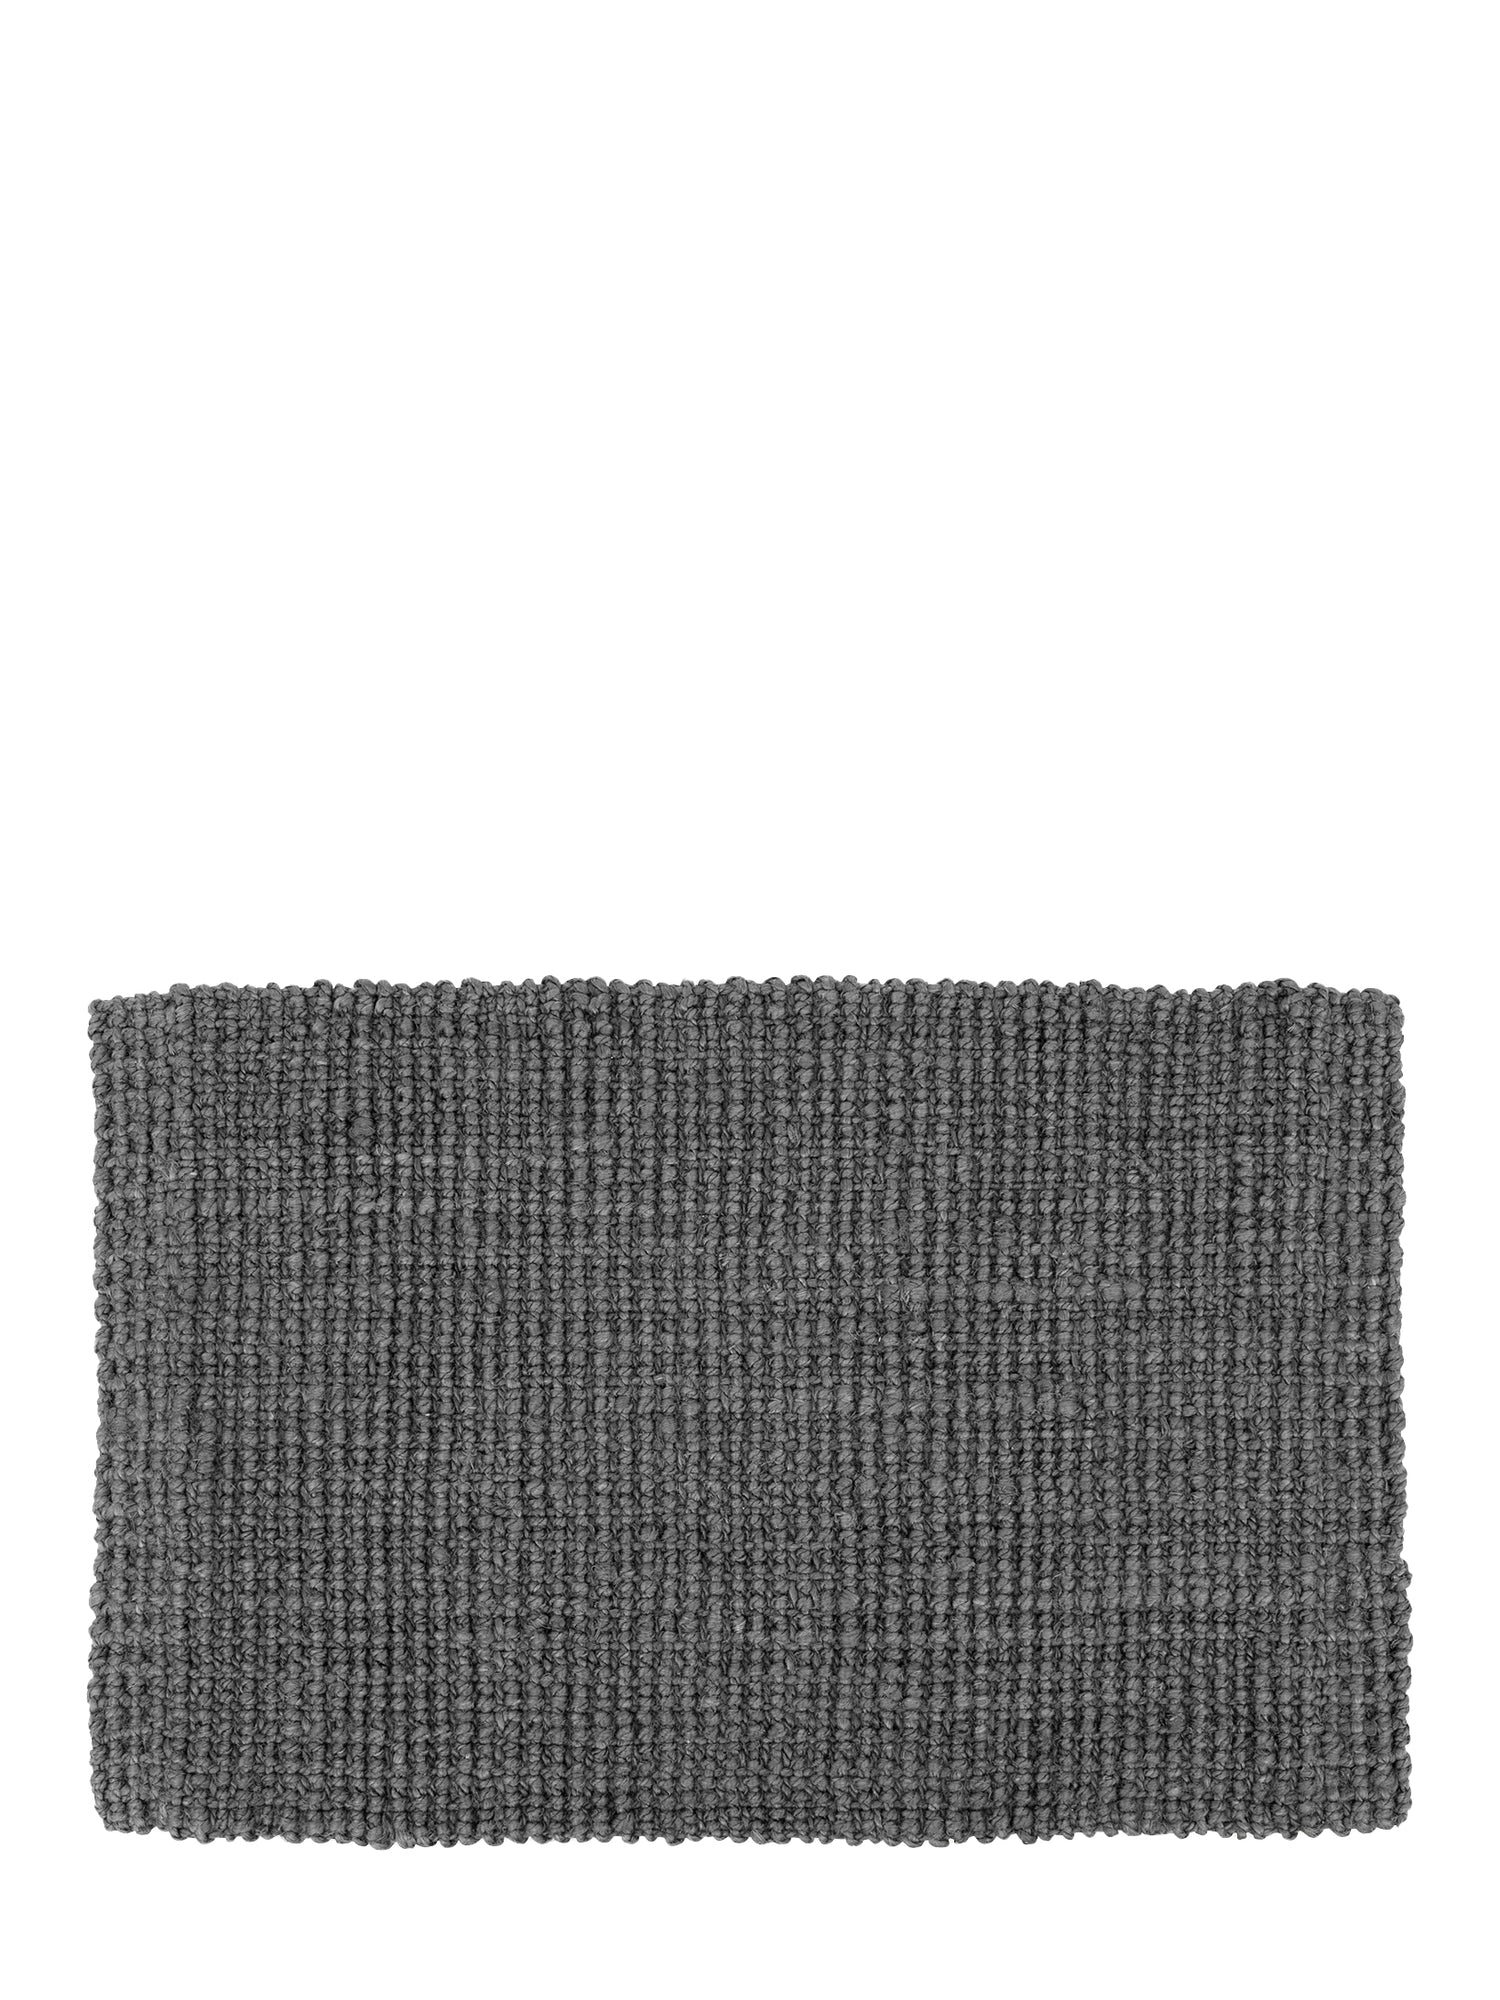 Doormat Julia (60x90cm), lead grey